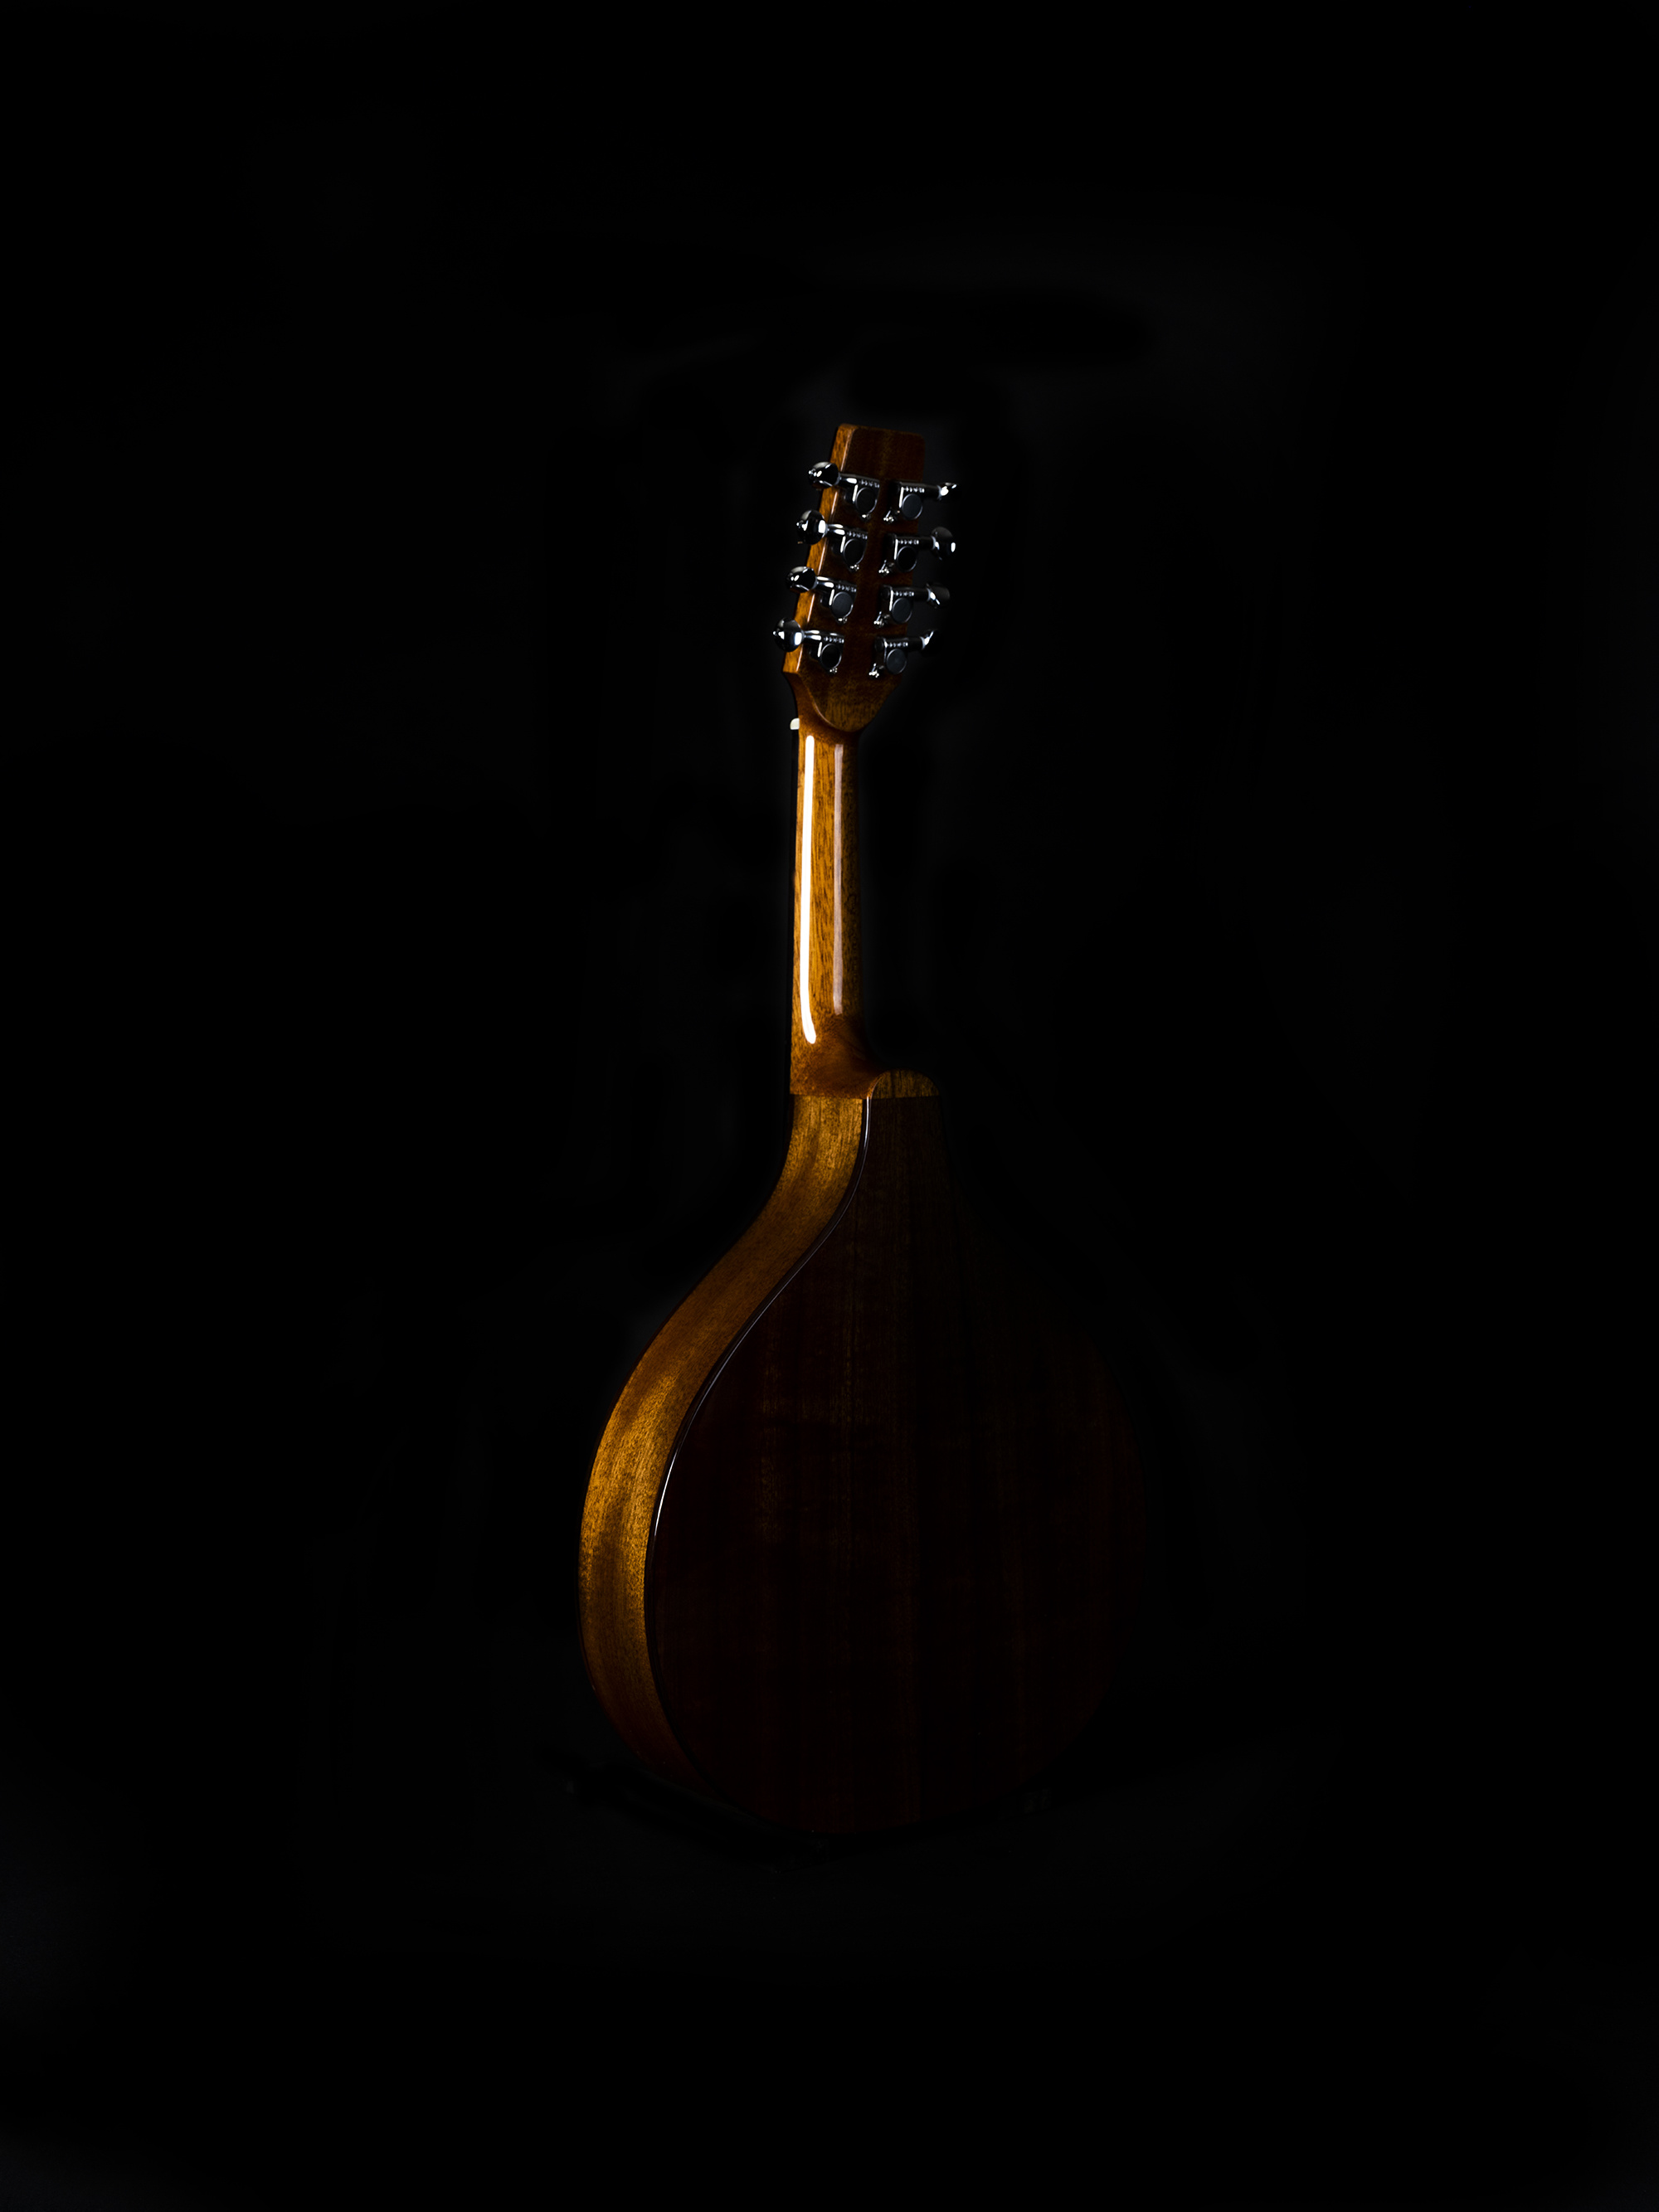 Mandola: The Ancient Pandura, Folk Instrument, Glossy Lacquered Surface, Short Neck. 2000x2670 HD Background.